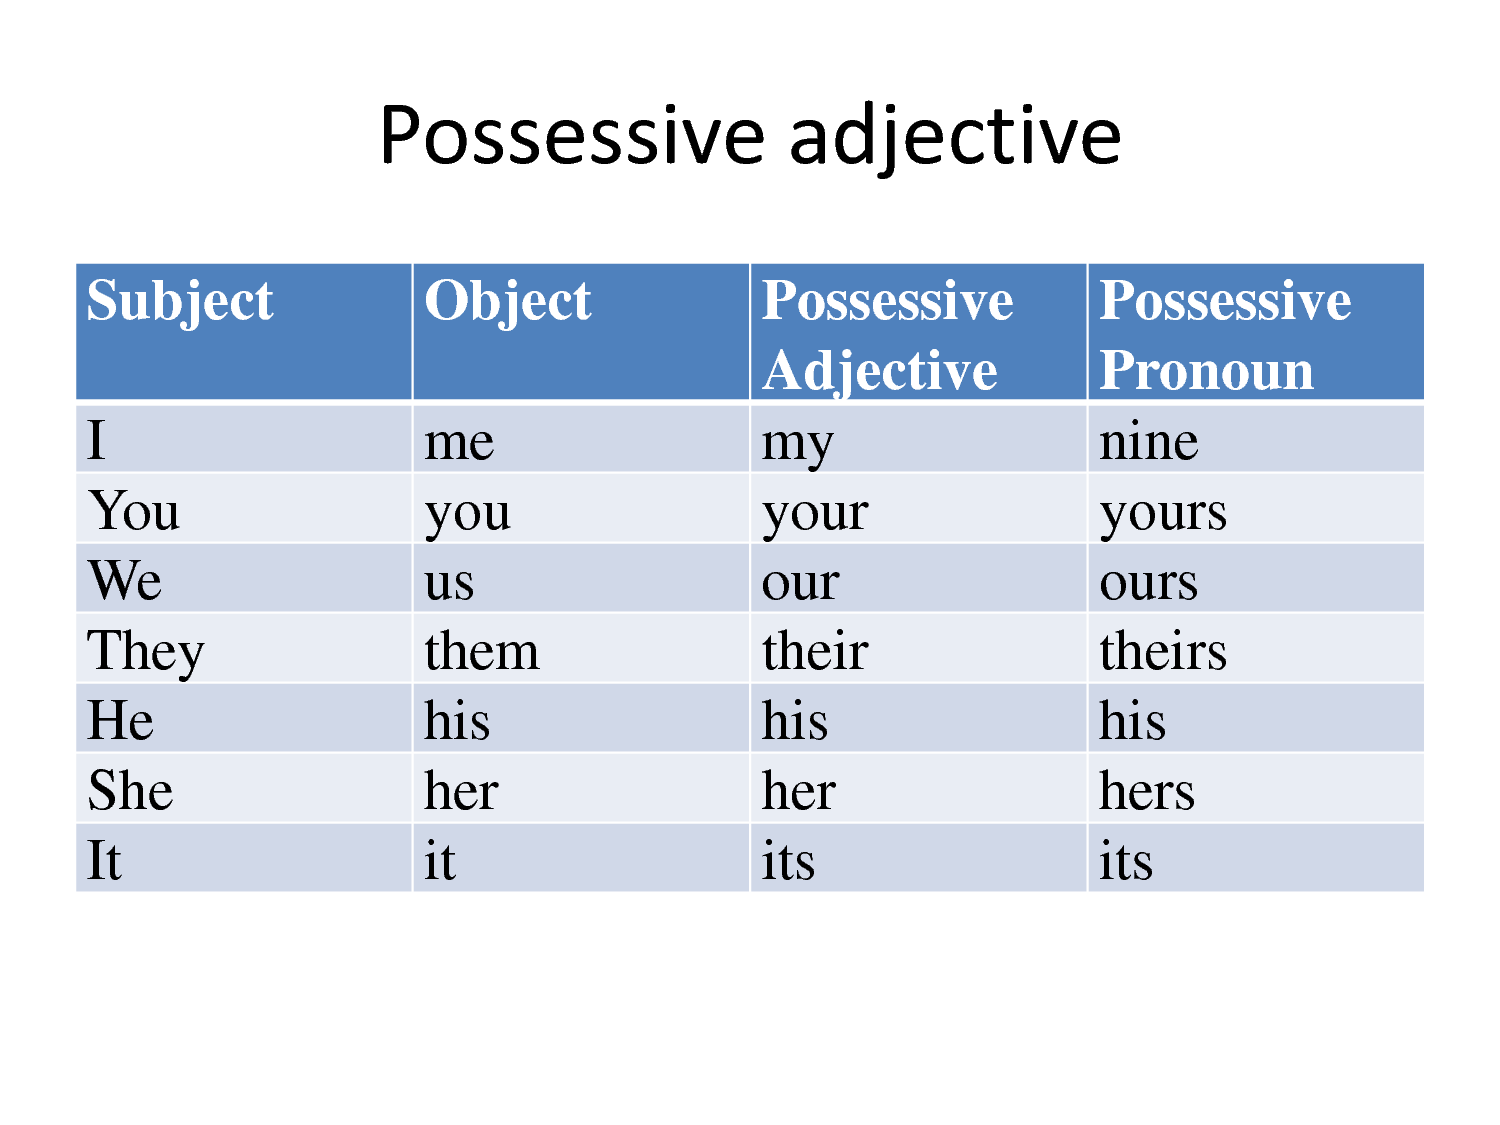 Subject possessive. Subject pronouns possessive adjectives possessive pronouns правило. Possessive adjectives and pronouns правило. Subject pronouns и object pronouns possessive adjectives правило. Object pronouns possessive adjectives правило.